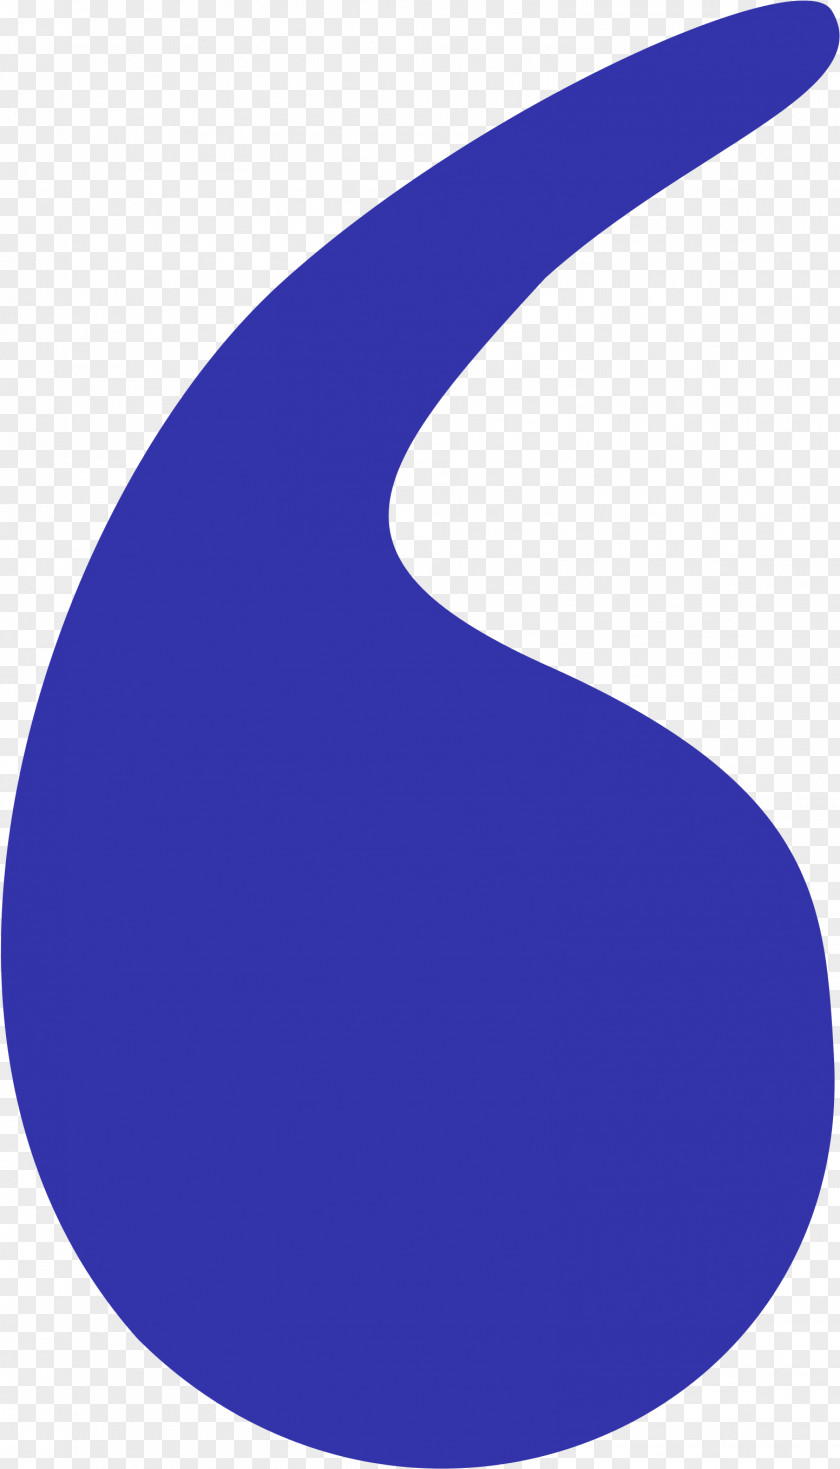 Blue Tongue Clip Art Wikipedia Quotation Mark Wikimedia Foundation Wiktionary PNG